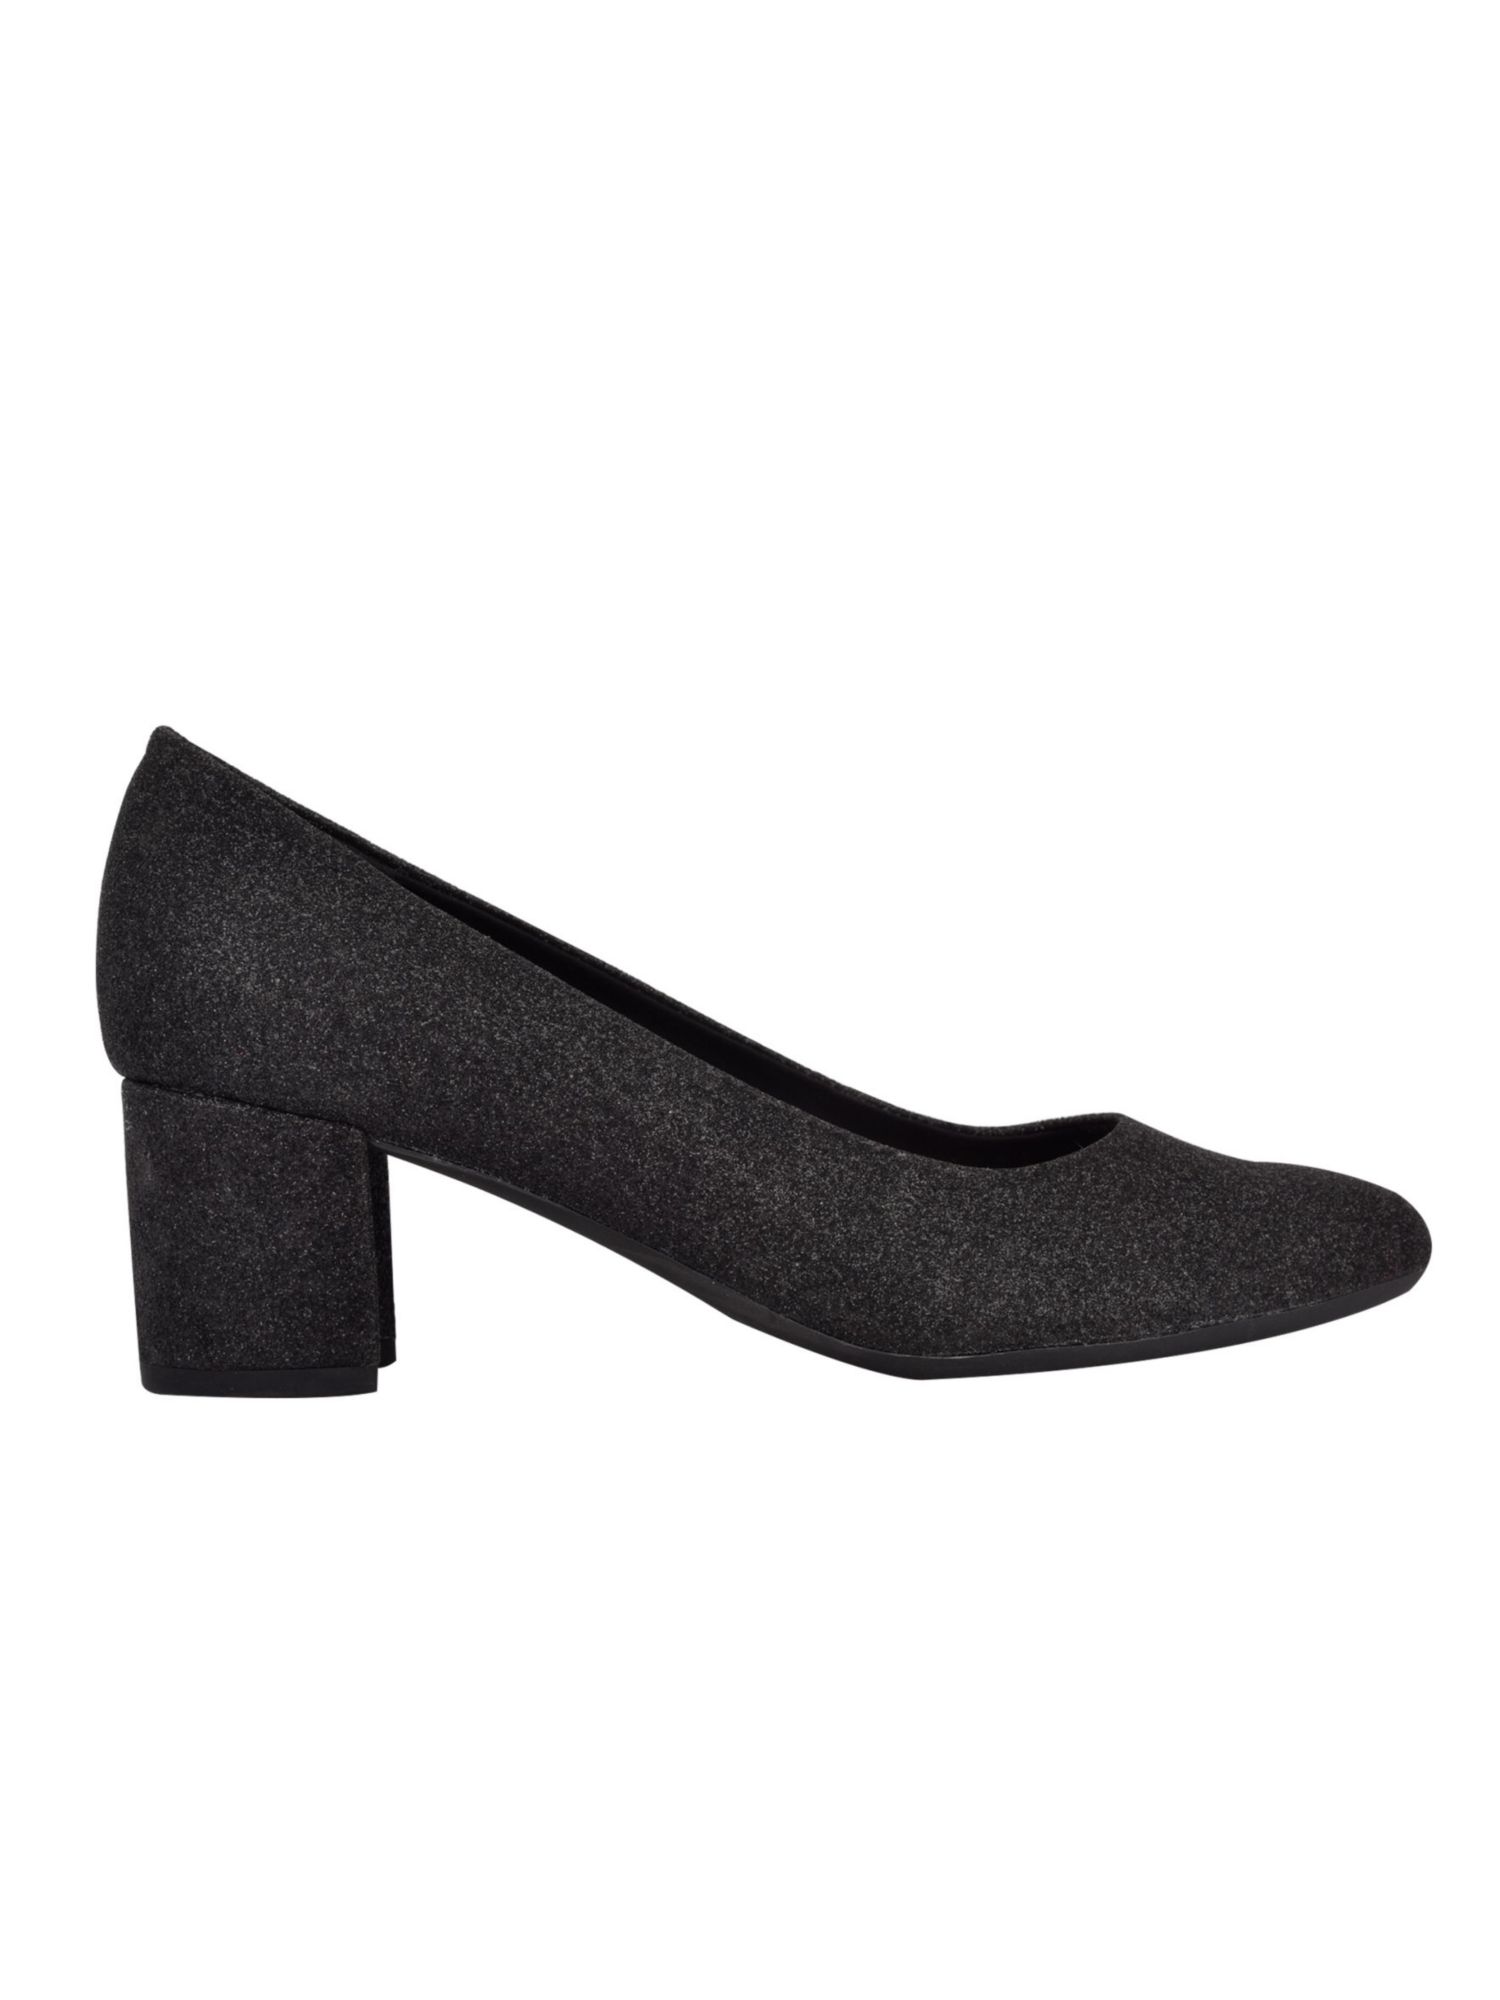 EVOLVE Womens Black Cushioned Glitter Robin3 Almond Toe Block Heel Slip On Dress Pumps Shoes 9 M